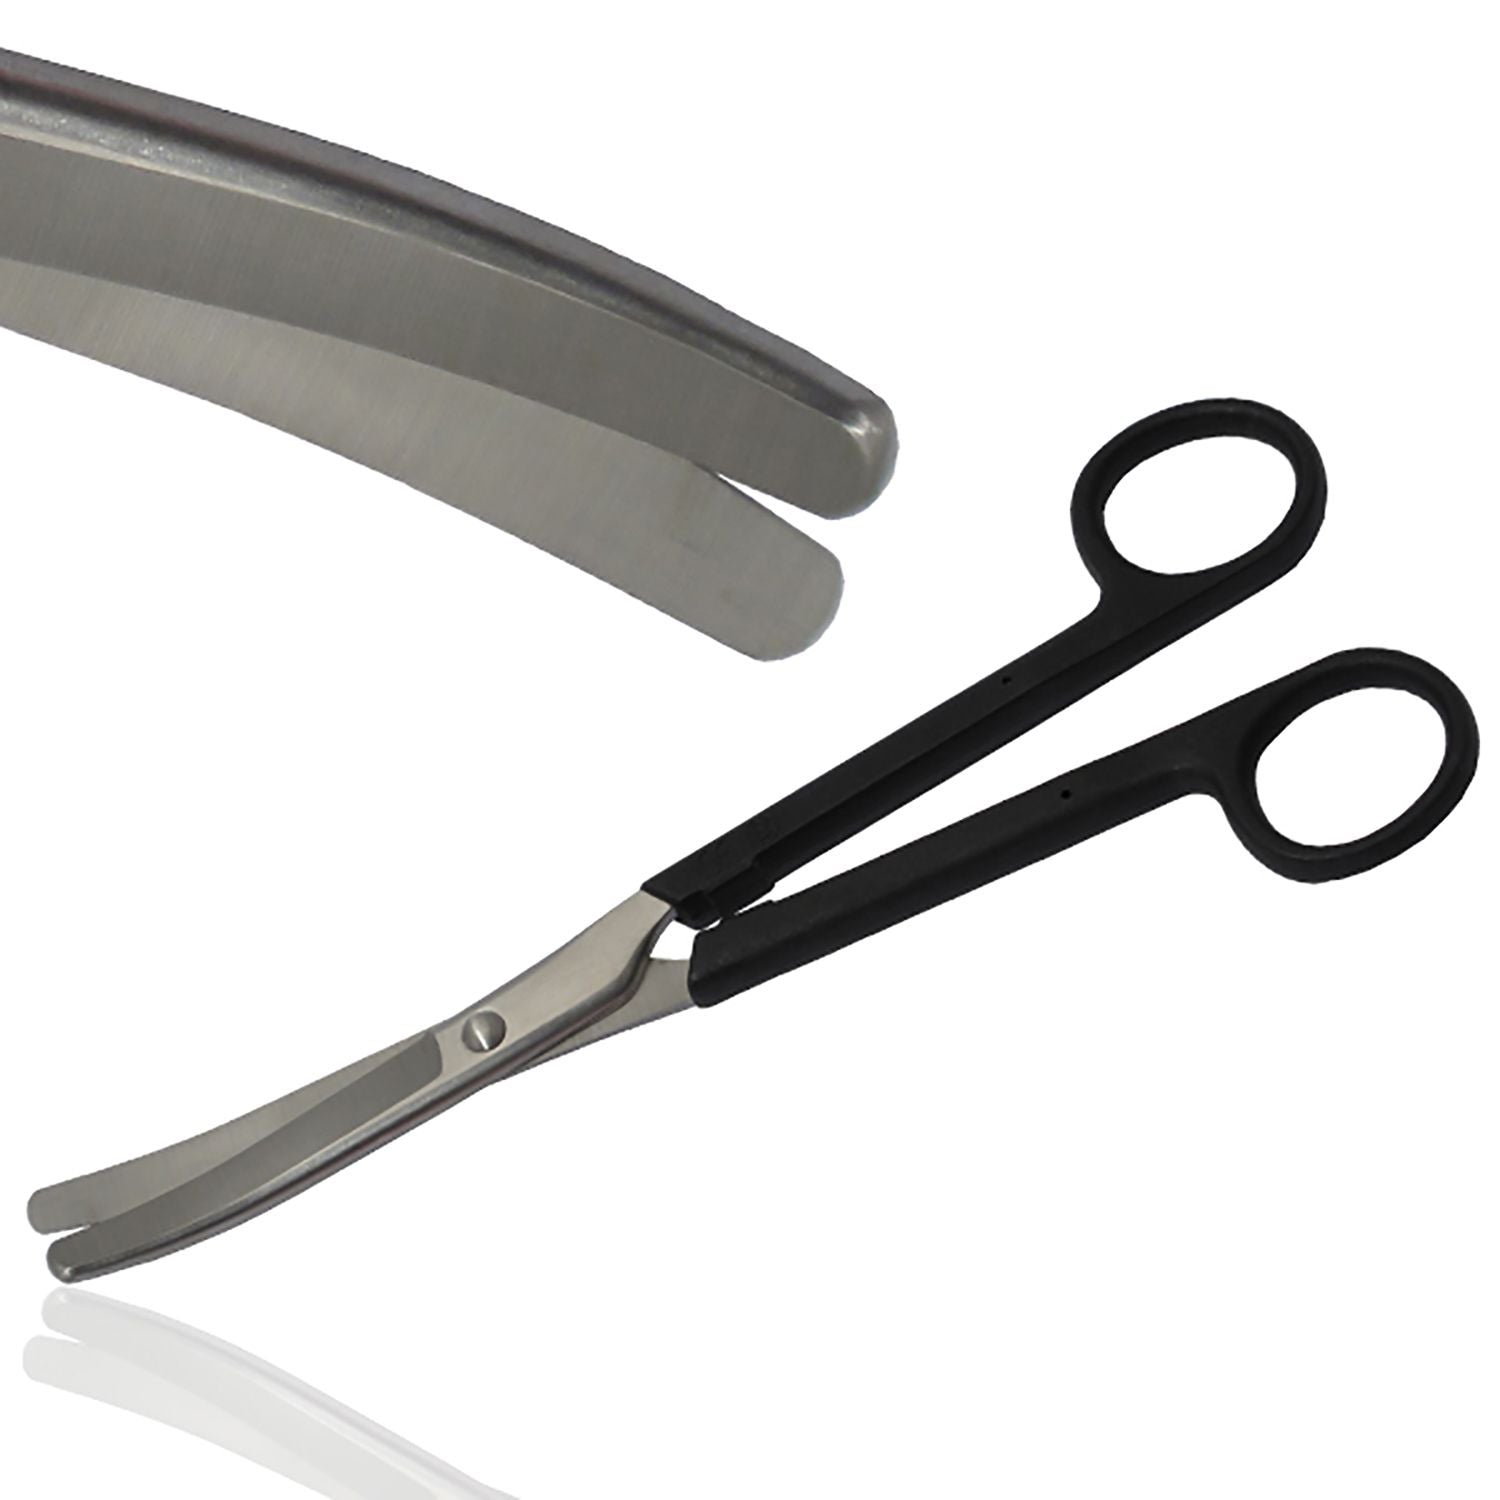 Instramed Sims Uterine Scissors | Curved | 20cm | Pastic Handle | Single